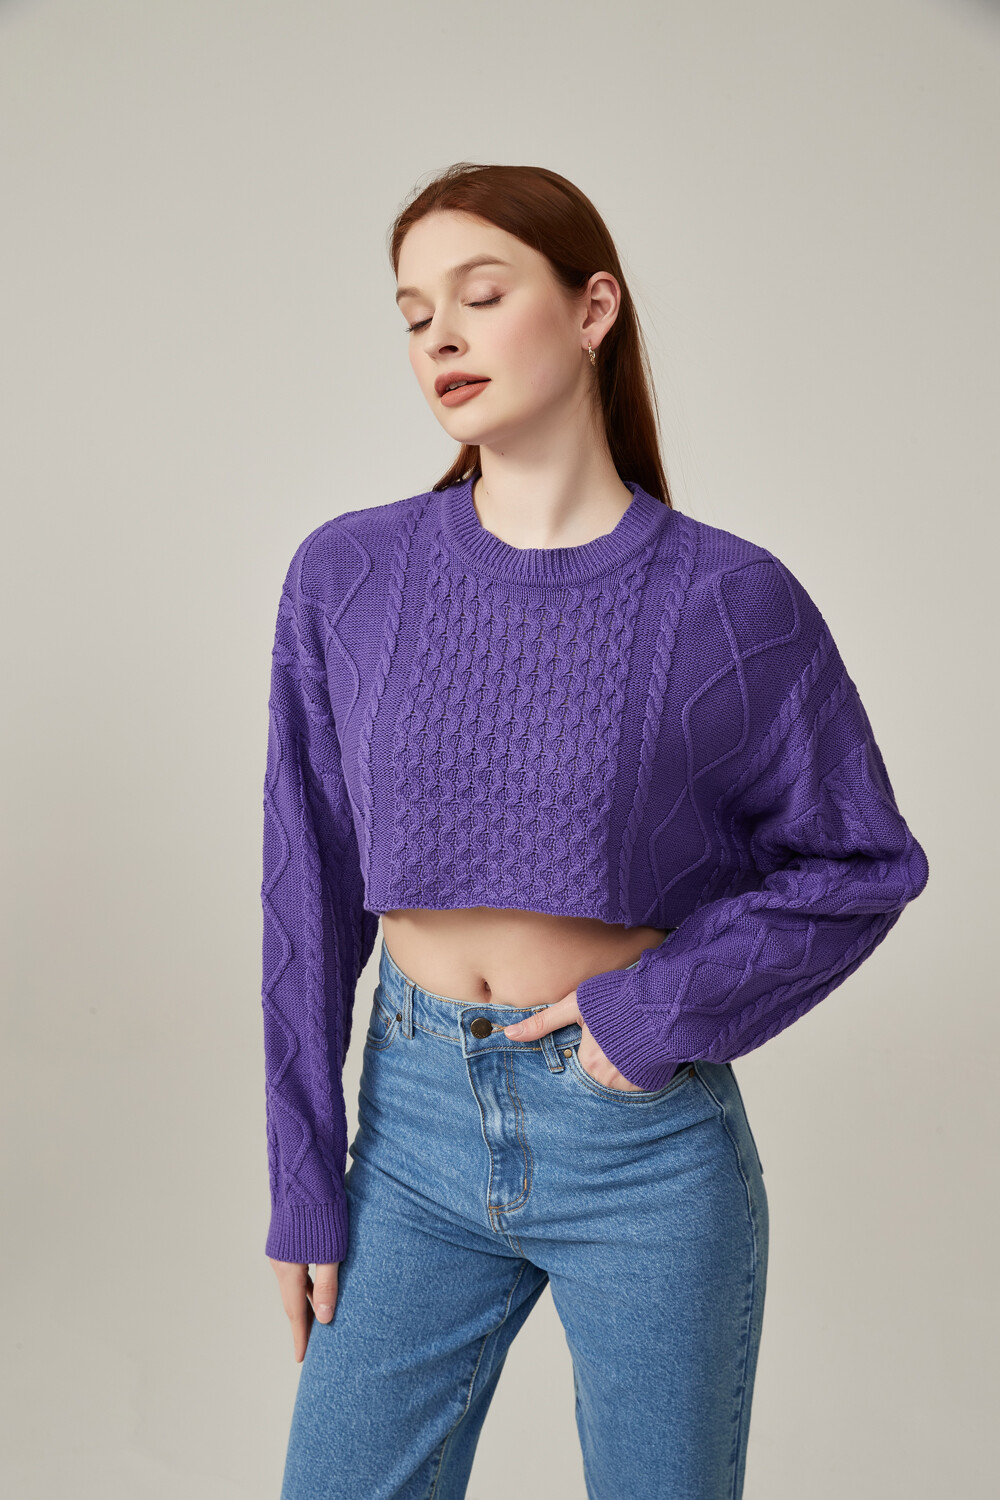 Sweater Biolcati Purpura